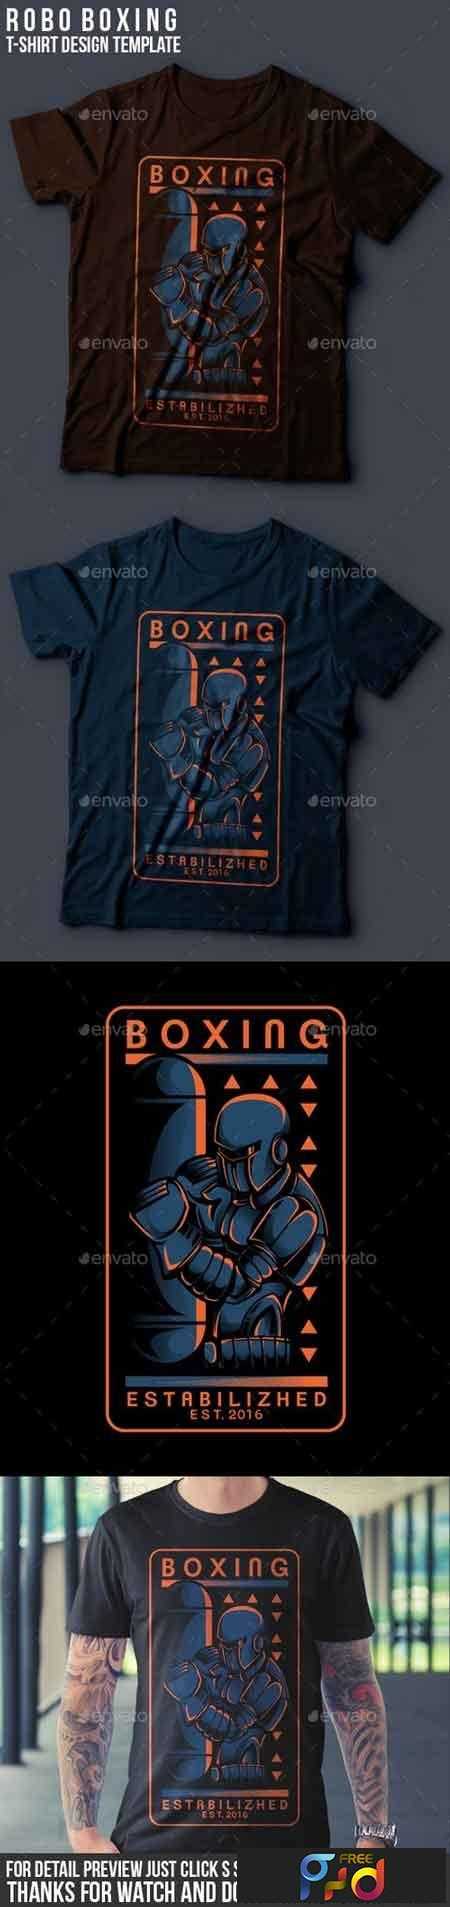 FreePsdVn.com 1811199 VECTOR robo boxing t shirt design 18532012